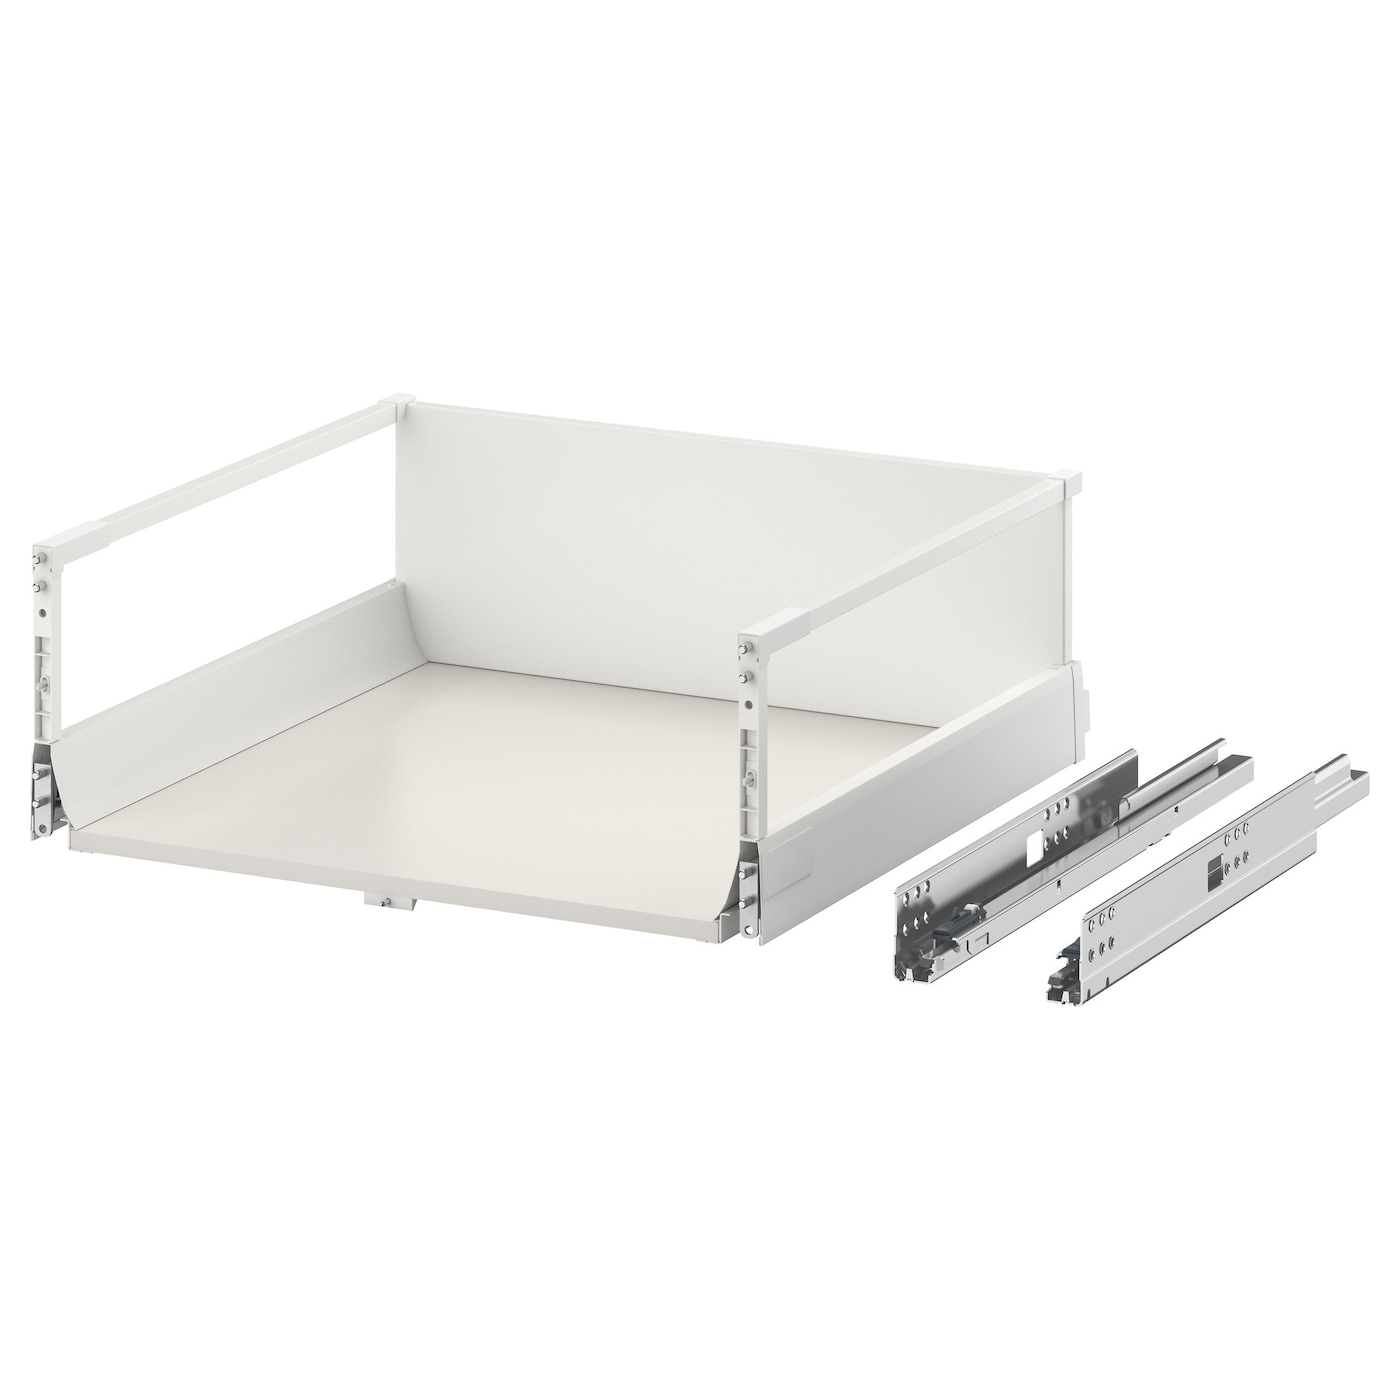 Выдвижной ящик  - EXCEPTIONELL IKEA/ ЭКСЕПТИОНЕЛЛЬ  ИКЕА, 56,4х21,2 см, белый